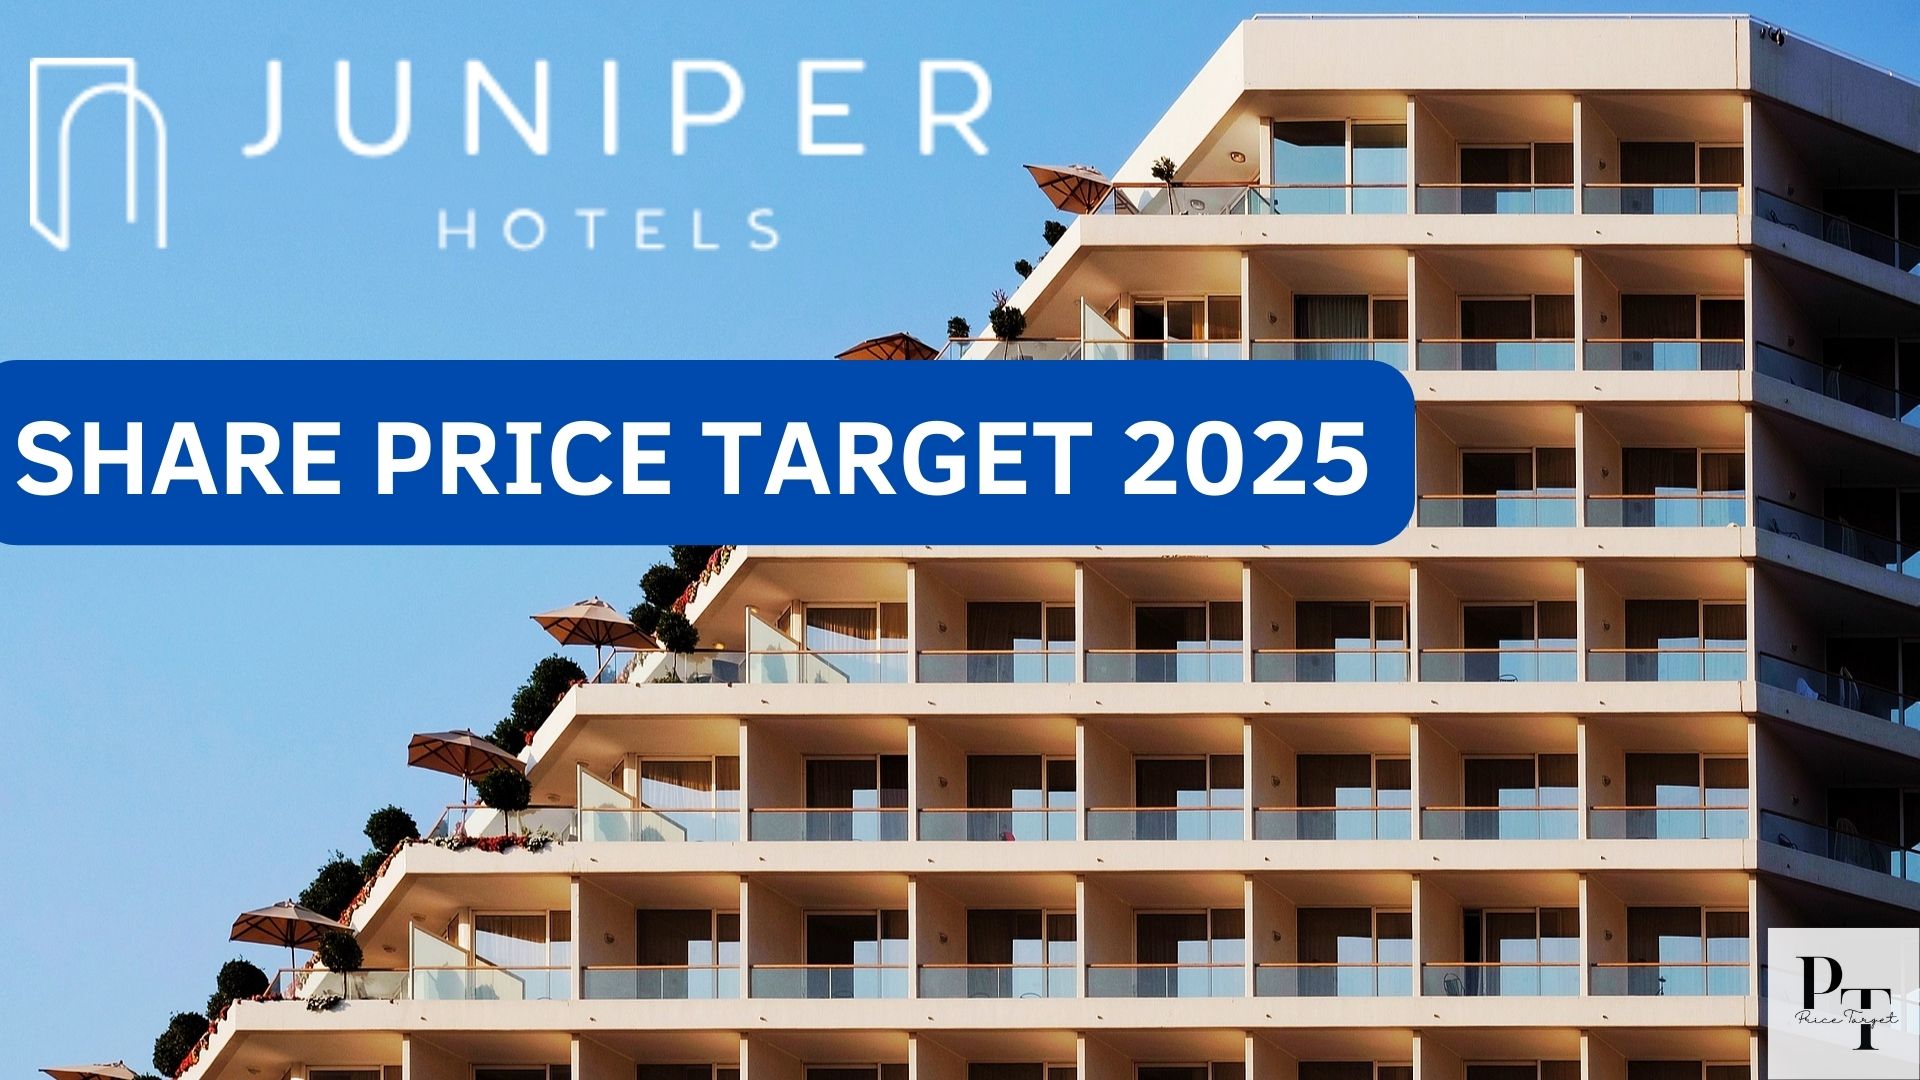 Juniper Hotels Share Price Target